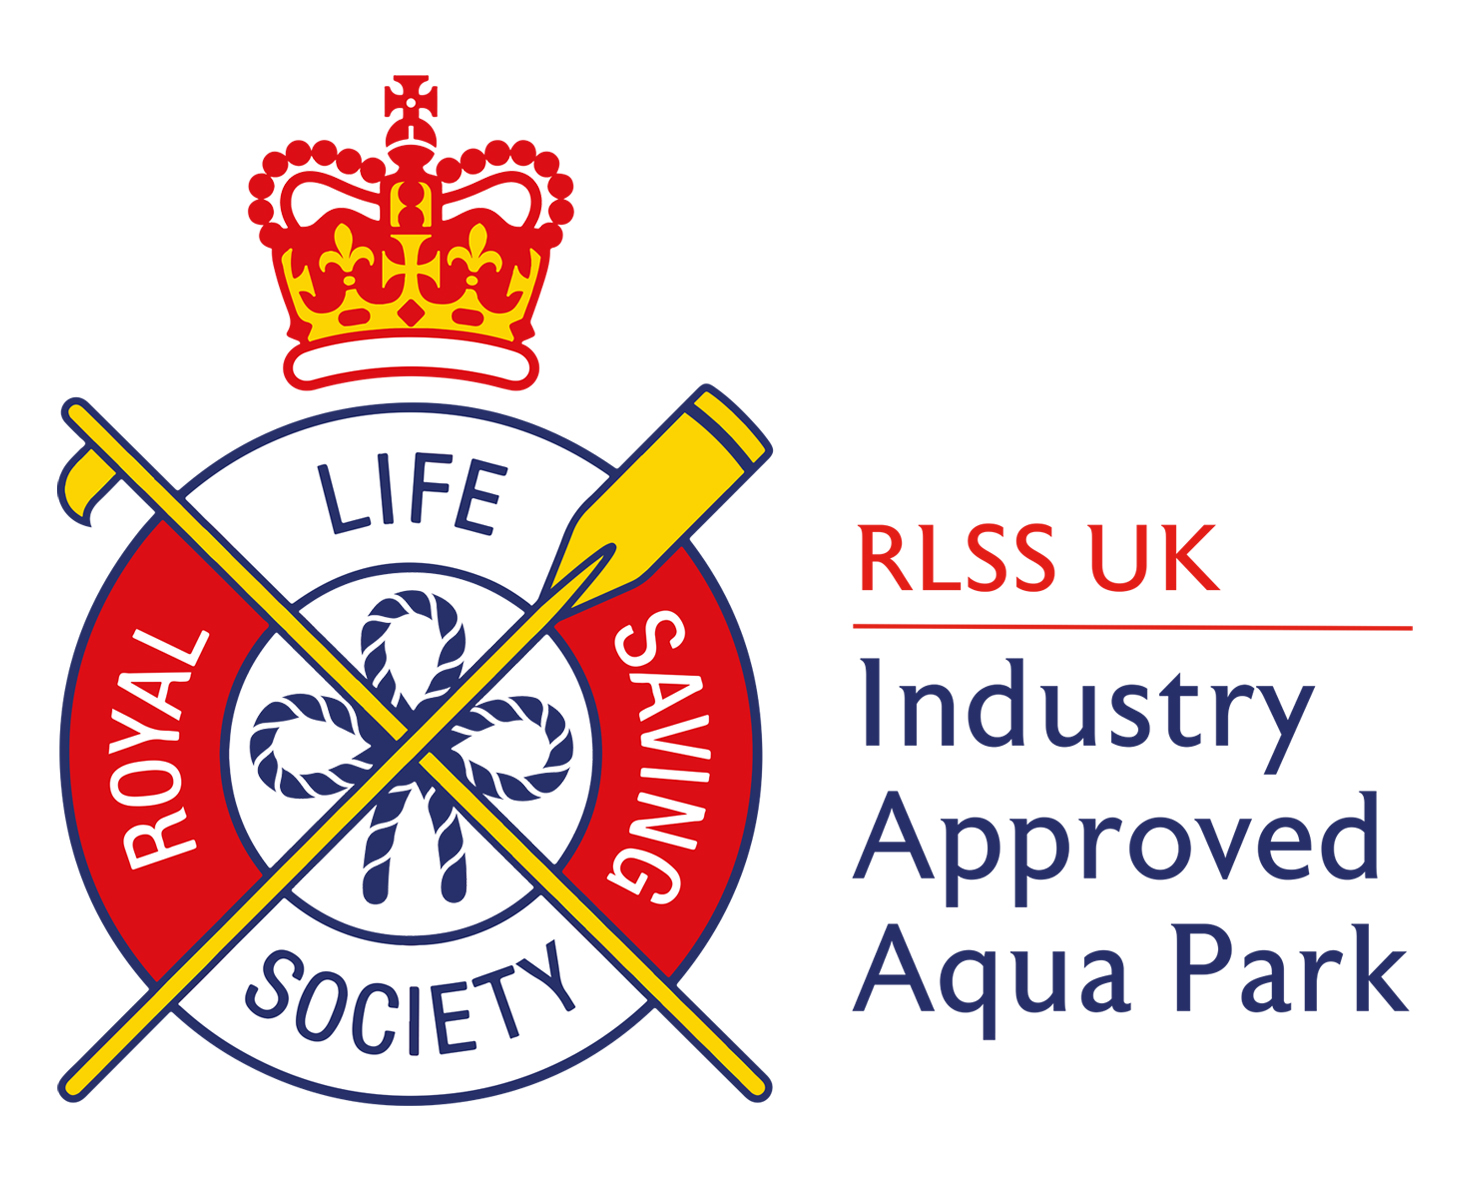 The Royal Life Saving Society Industry Approved Aqua Park